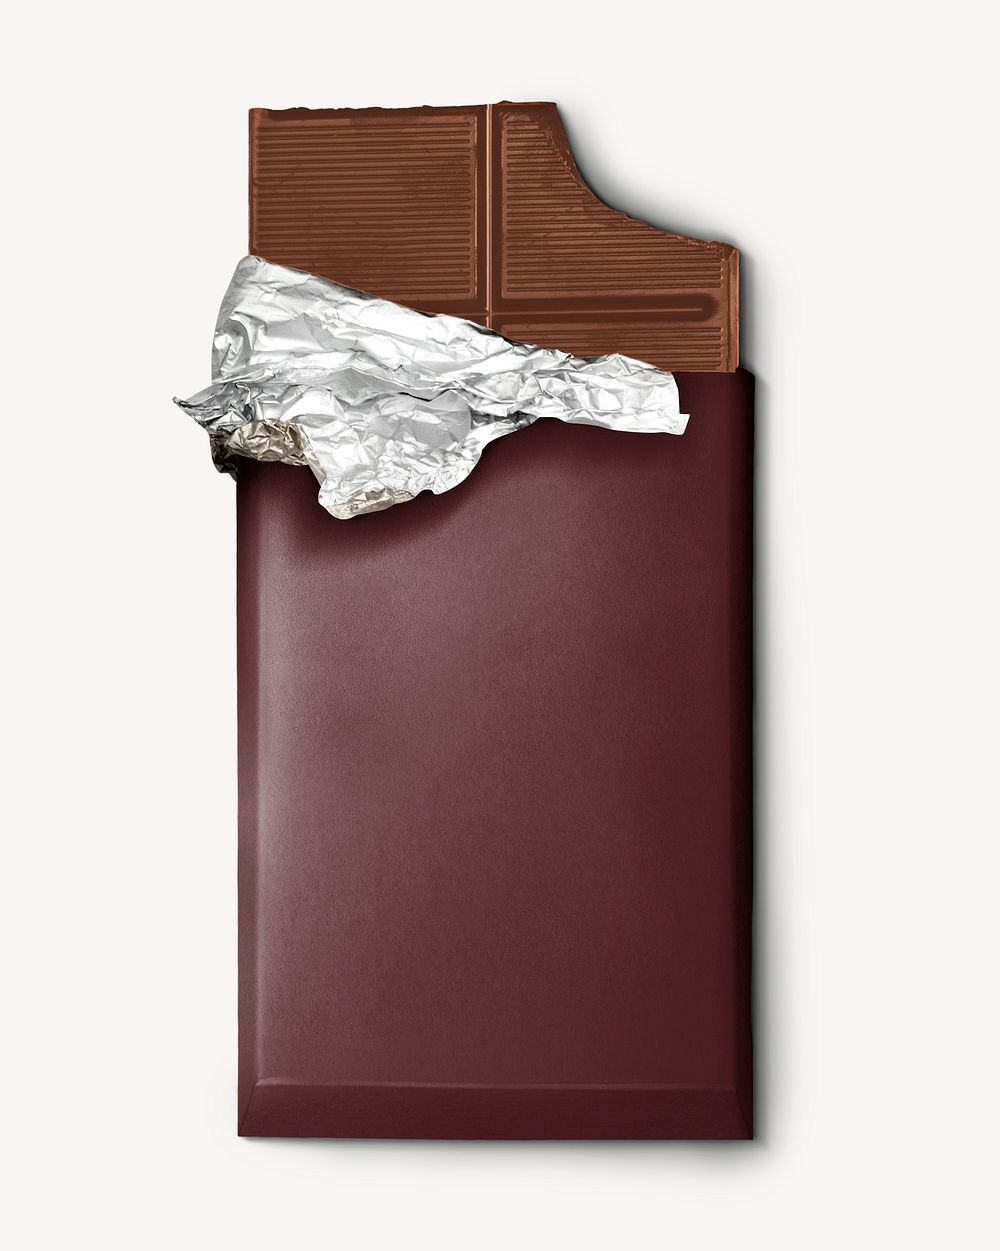 Chocolate packaging mockup psd